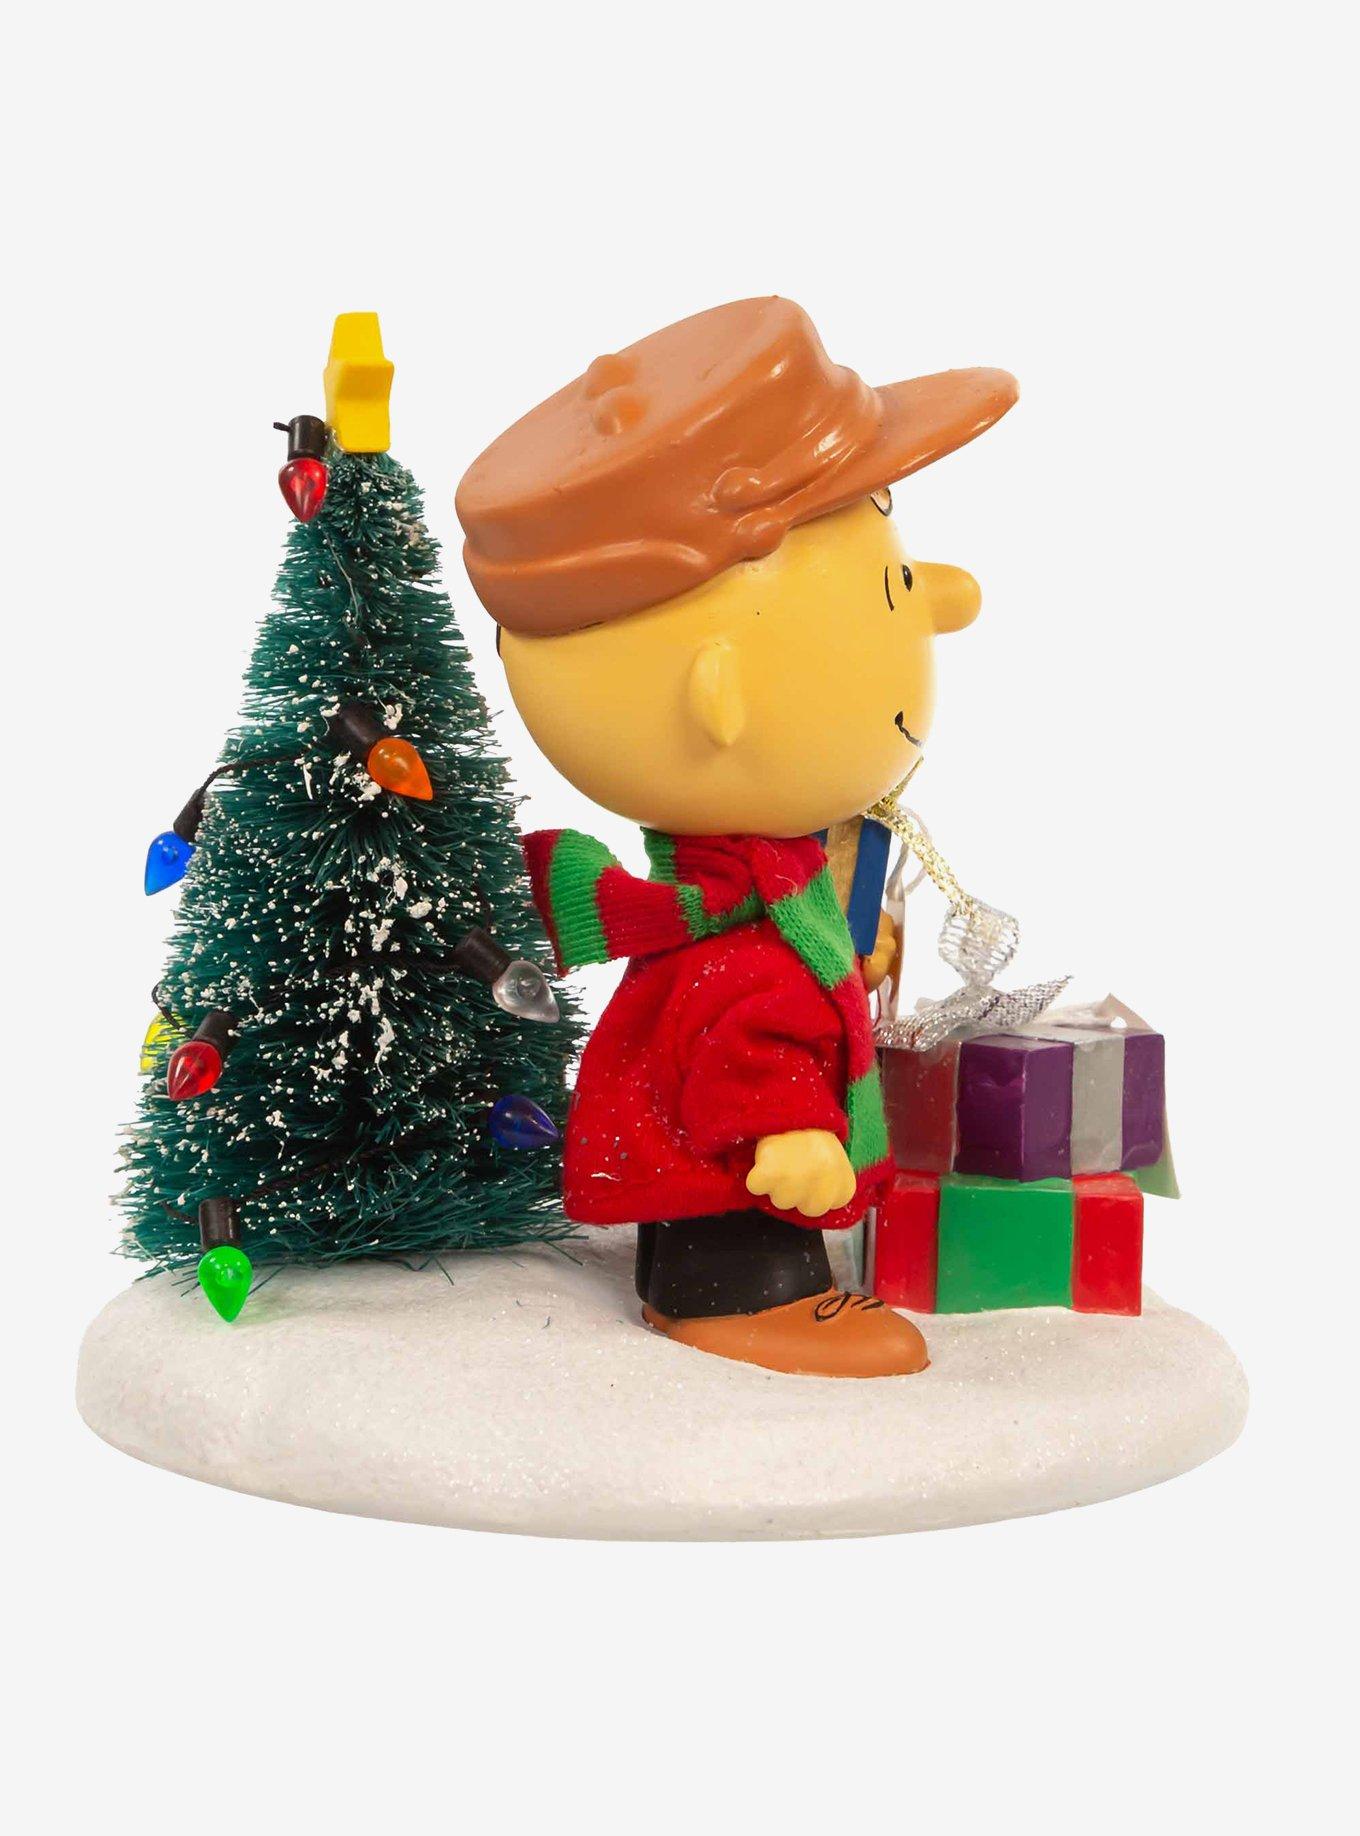 Peanuts Charlie Brown with Tree Fabric Mache Figure